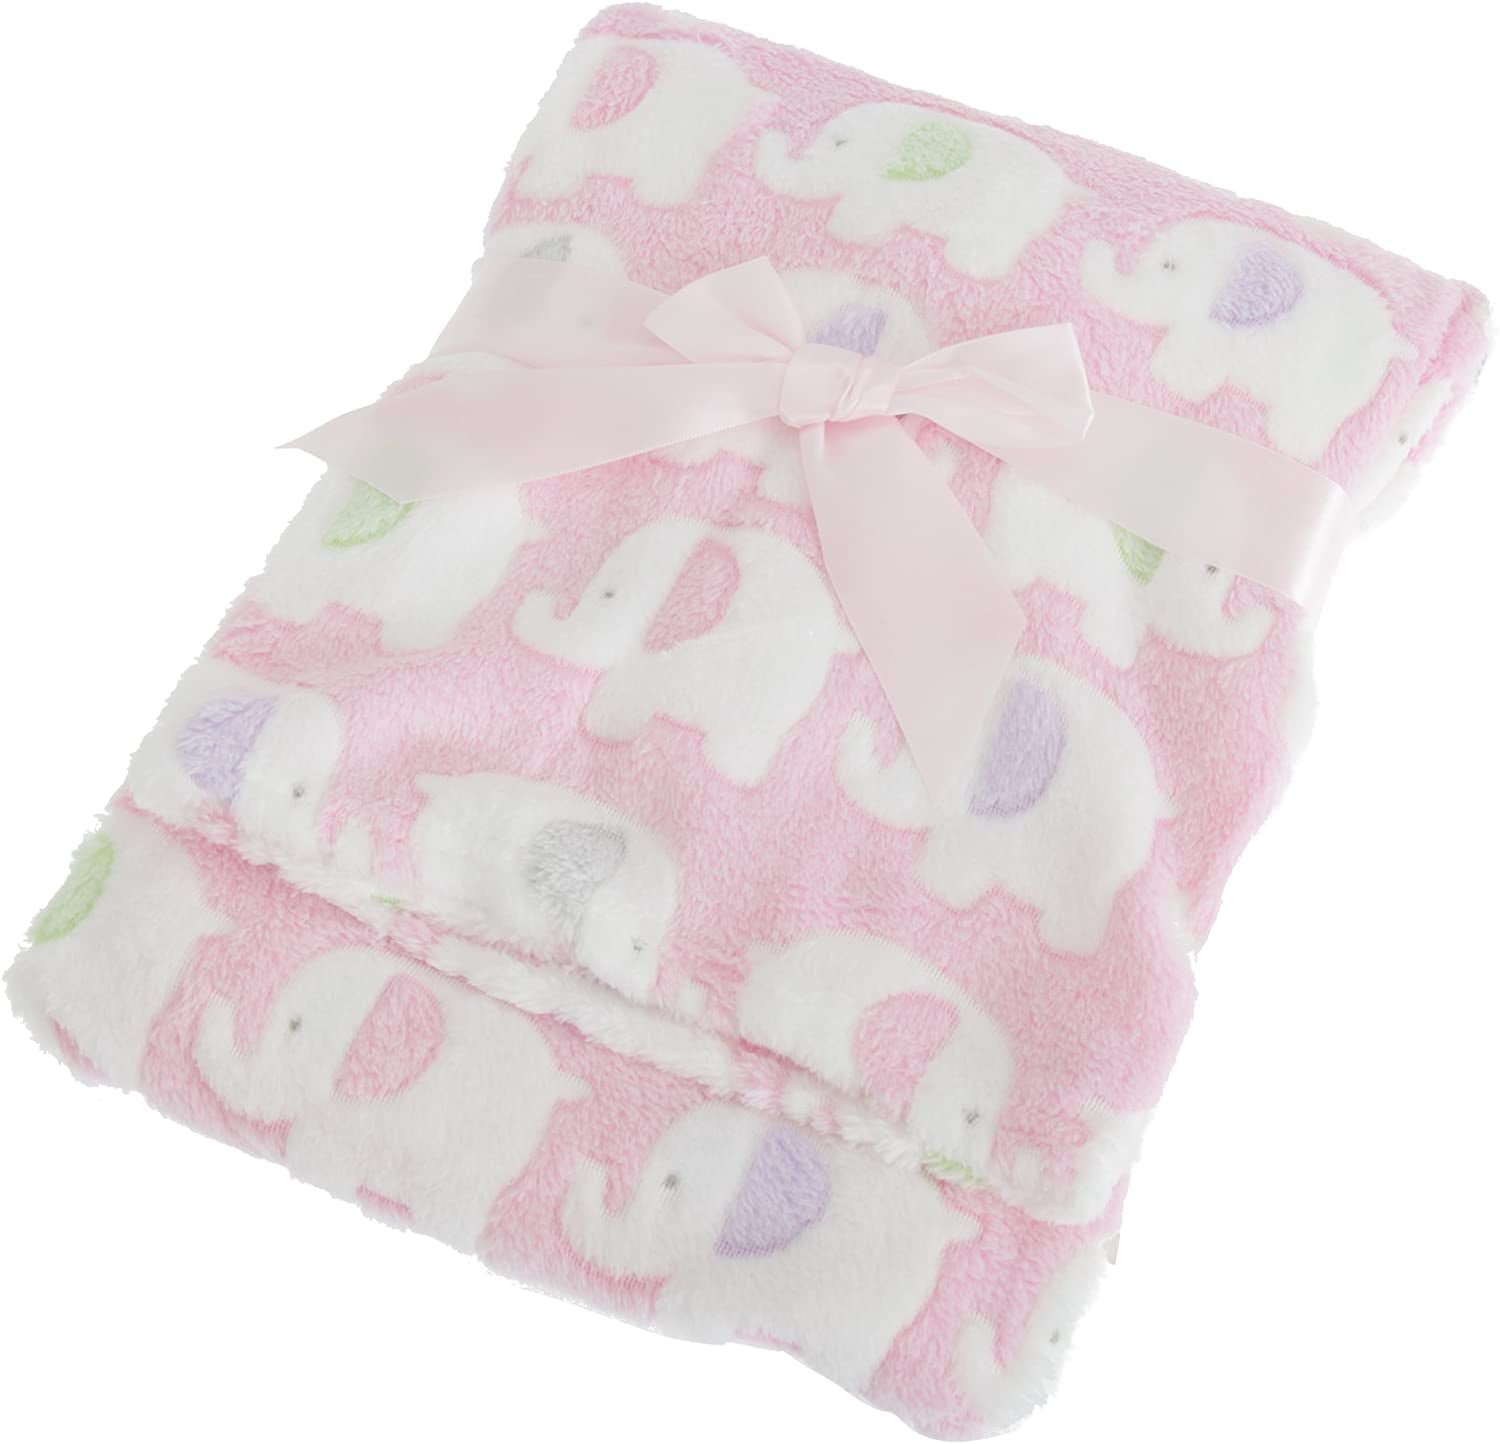 Baby Elephant Luxury Pram Blanket -Boy/Girl Options (75cm x 100cm) (Pink)